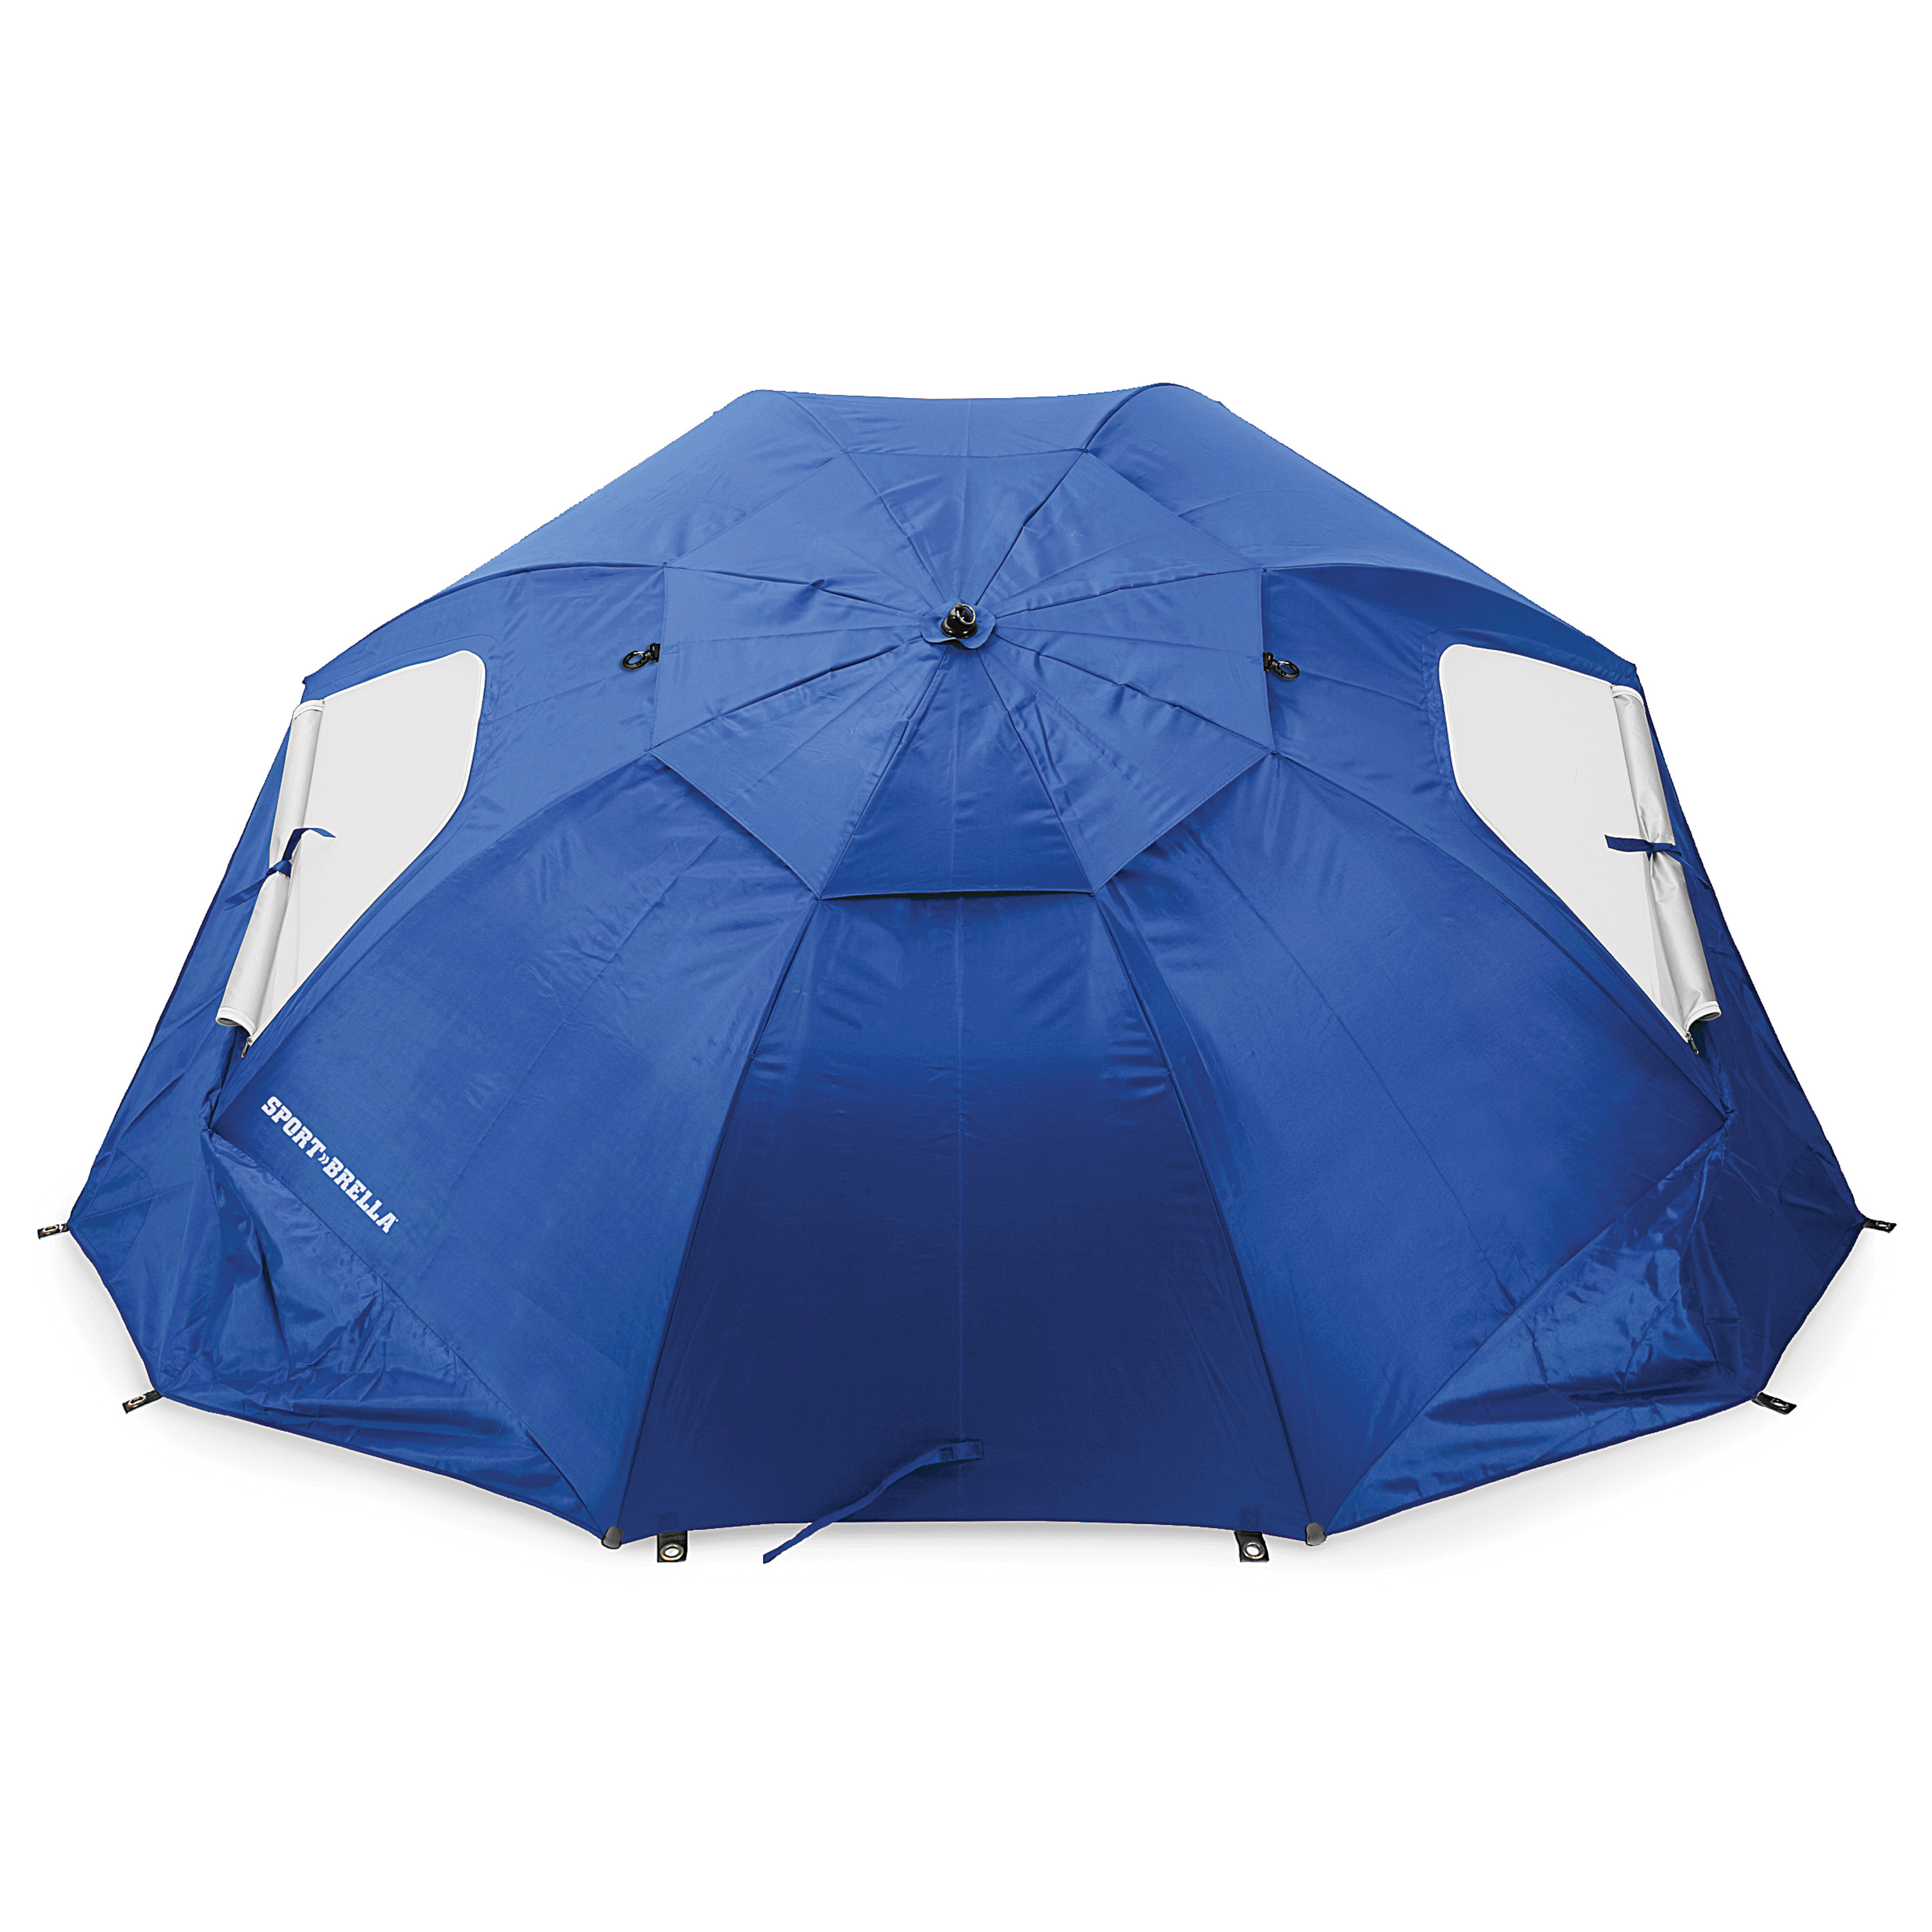 Sport-Brella Portable All-Weather & Sun Umbrella, 8 foot Canopy, Blue - image 5 of 7